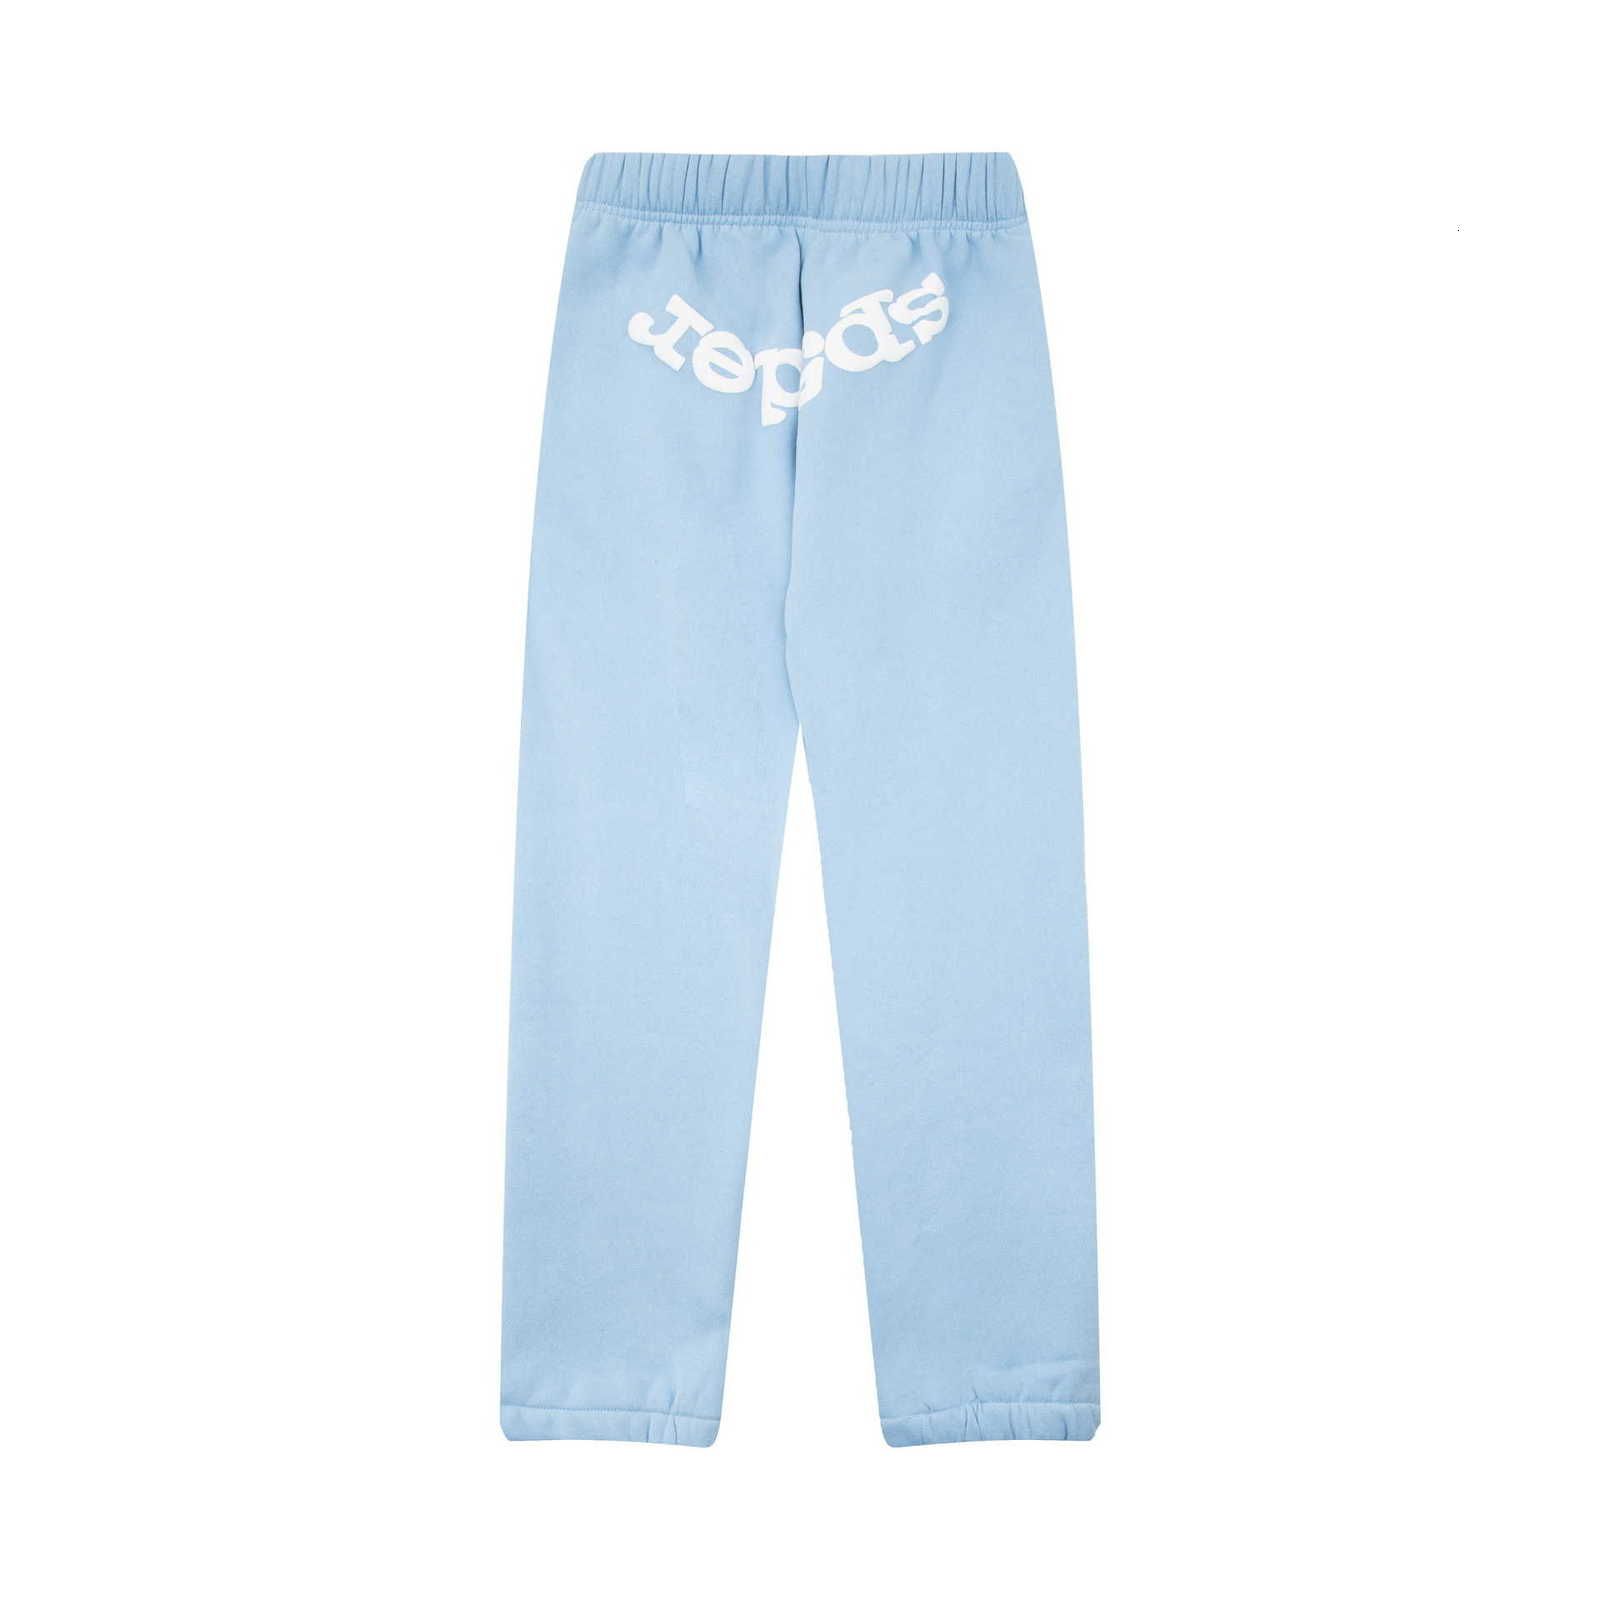 bleu ciel (pantalon sp03)